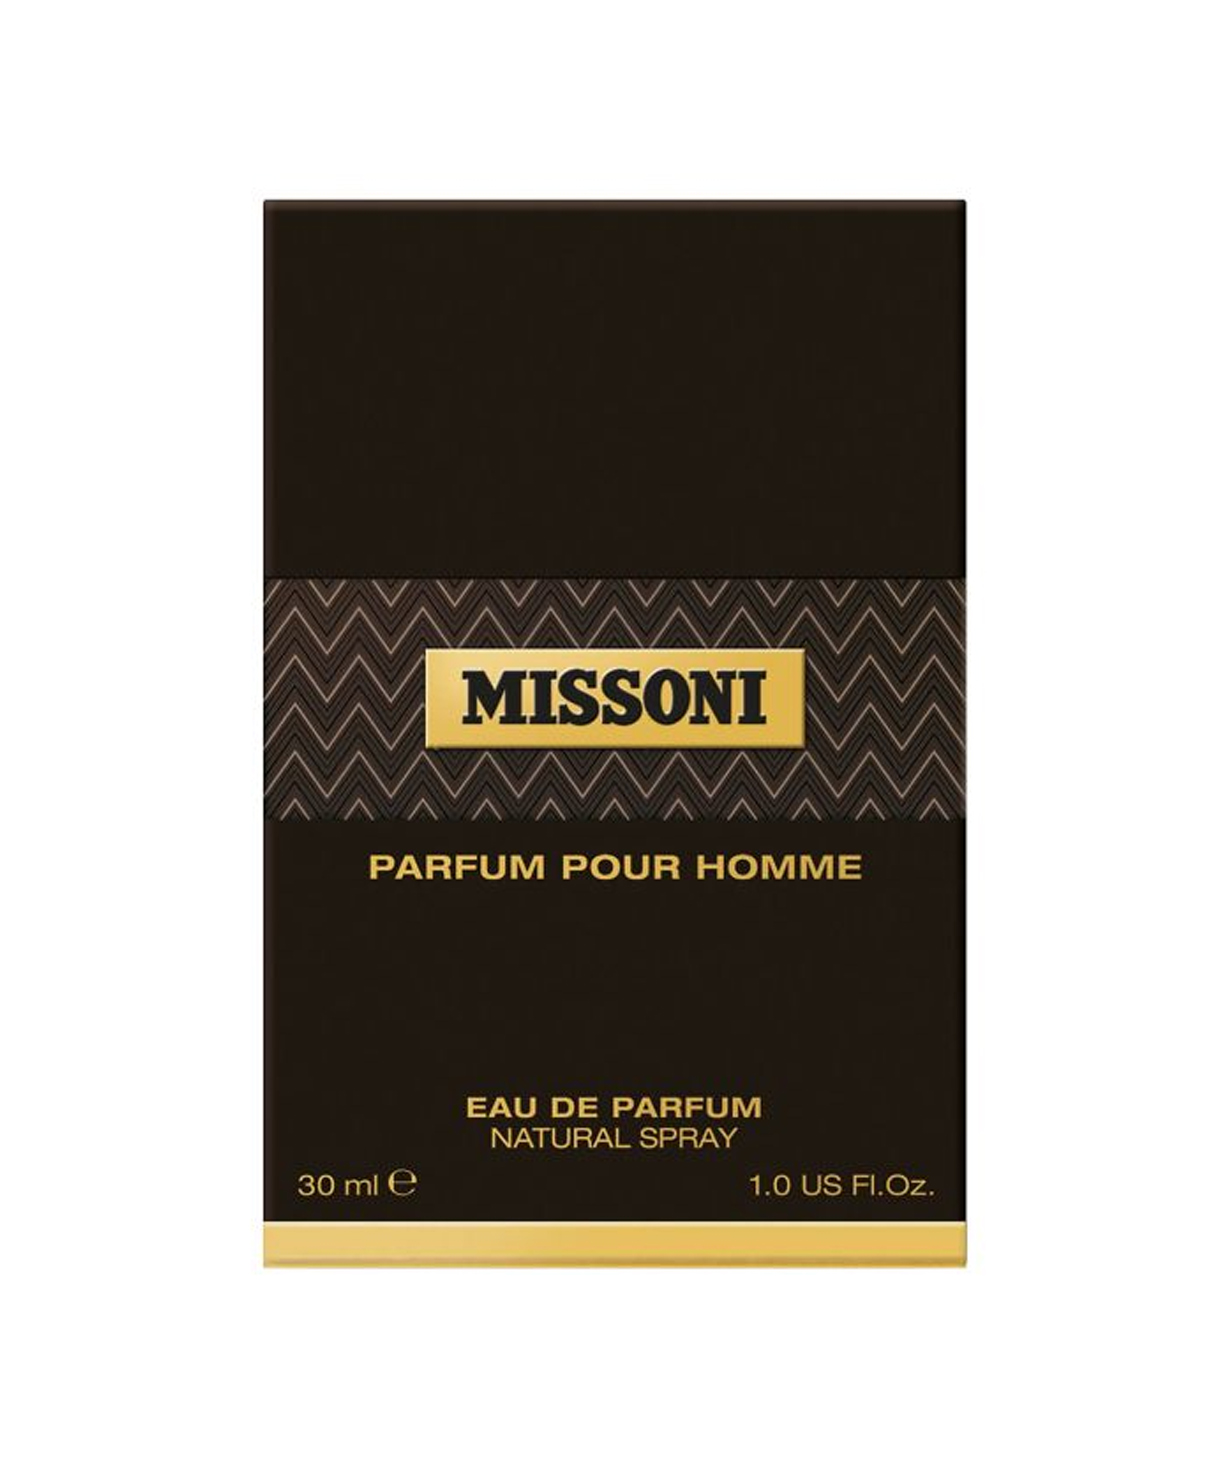 Perfume «Missoni» for men, 30 ml